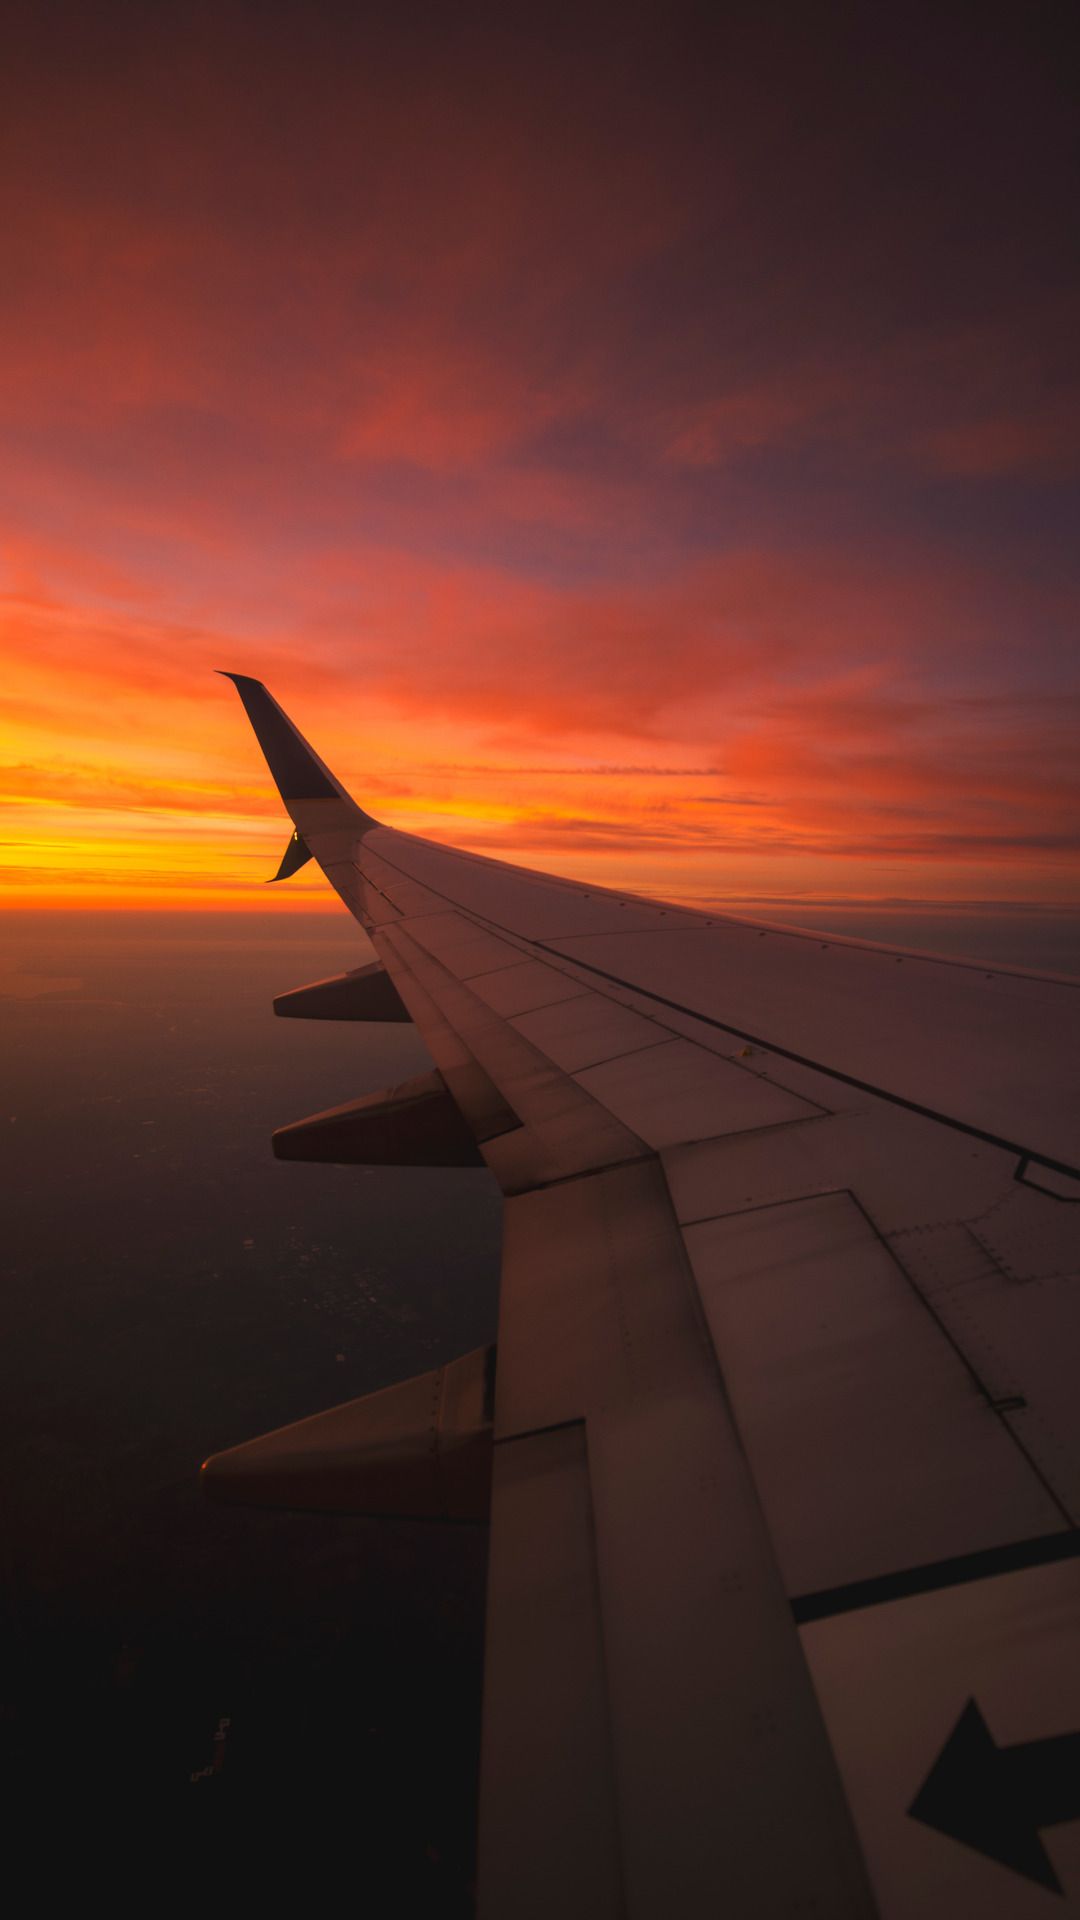  Flugzeug Hintergrundbild 1080x1920. Phone Wallpaper. Fondos de pantalla aviones, Imágenes de puesta de sol, Fondo de pantalla de viajes